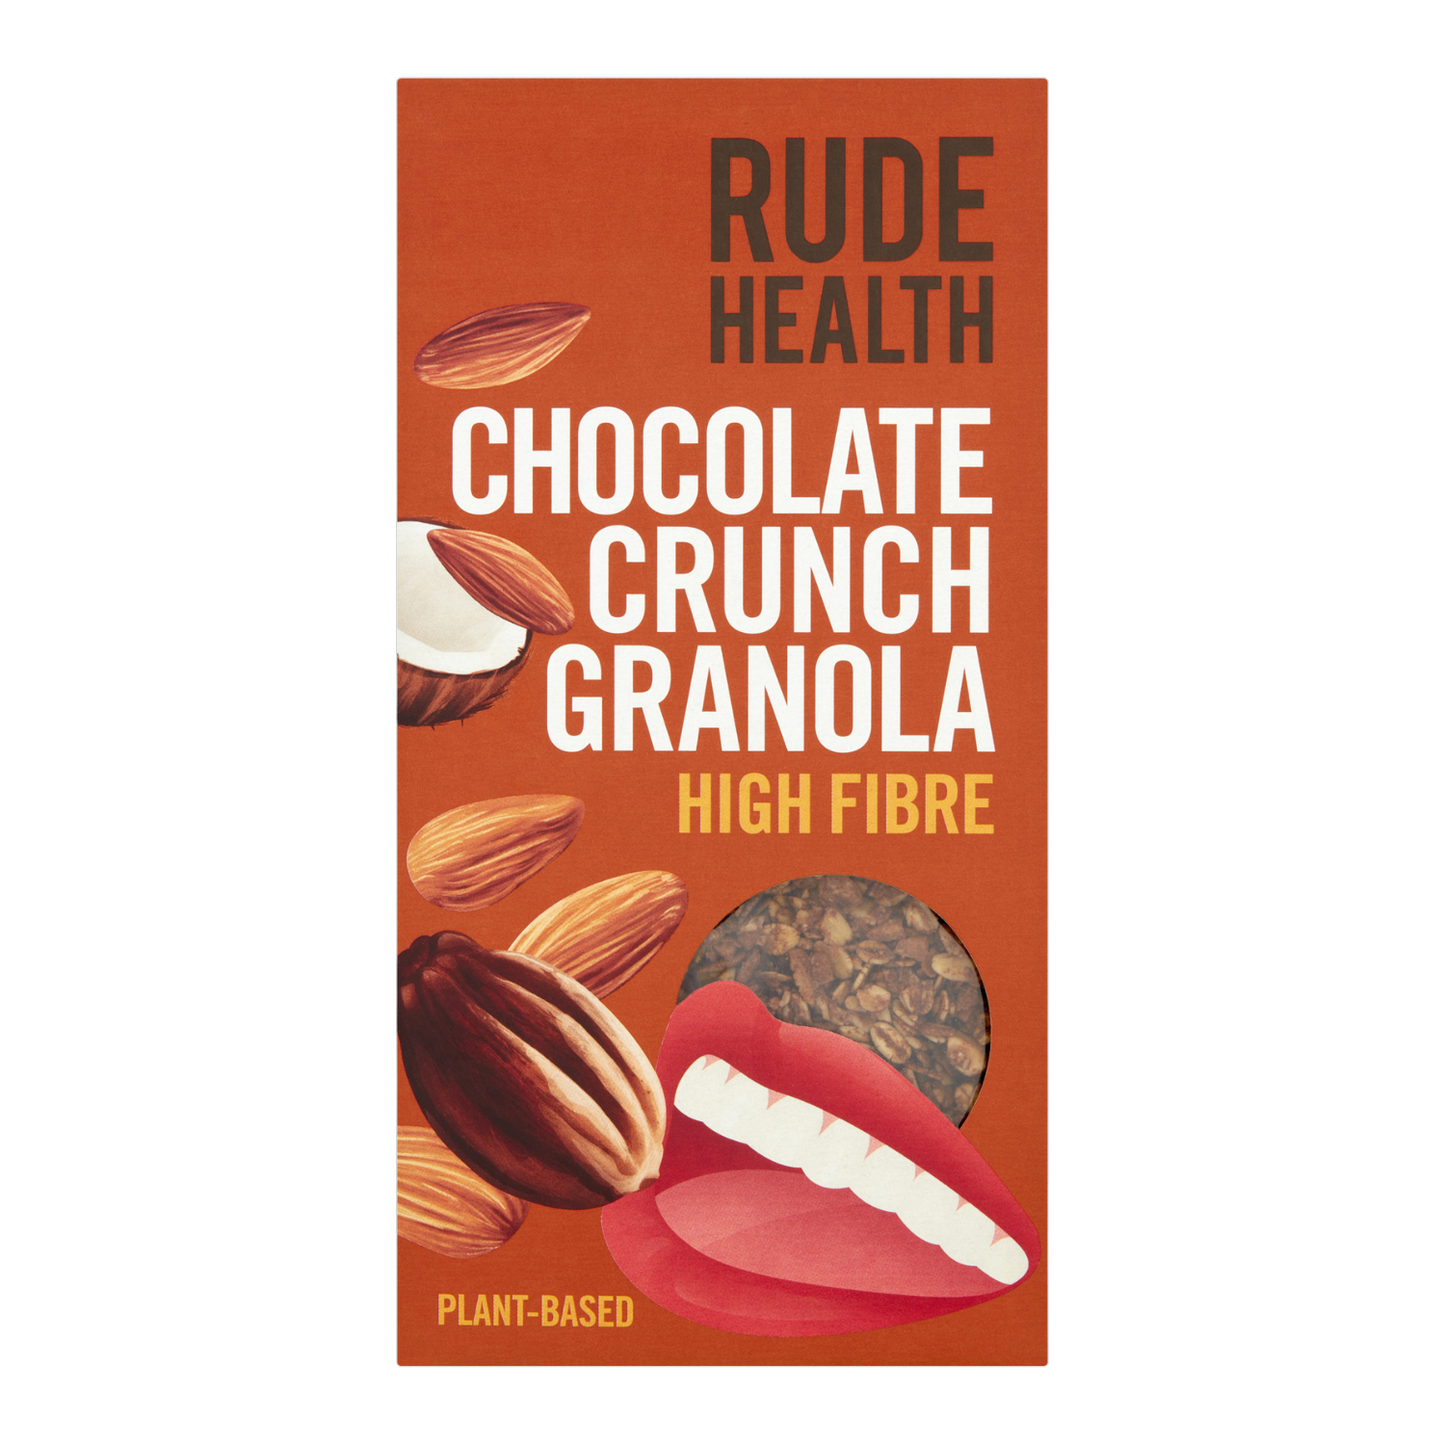 Rude Health High Fibre Chocolate Crunch Granola, 400g.